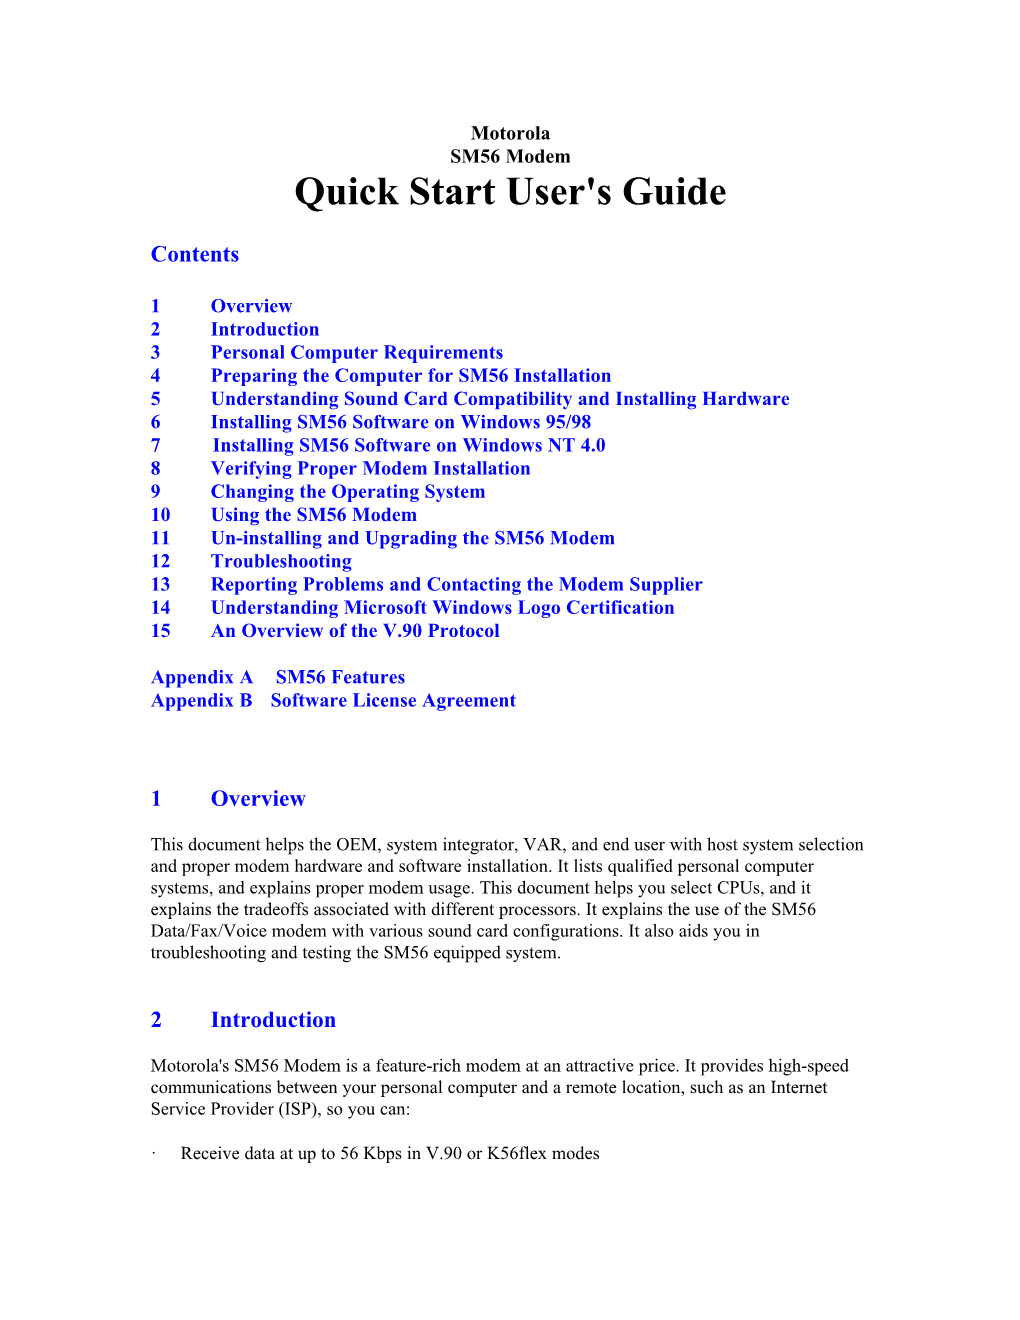 Quick Start User's Guide